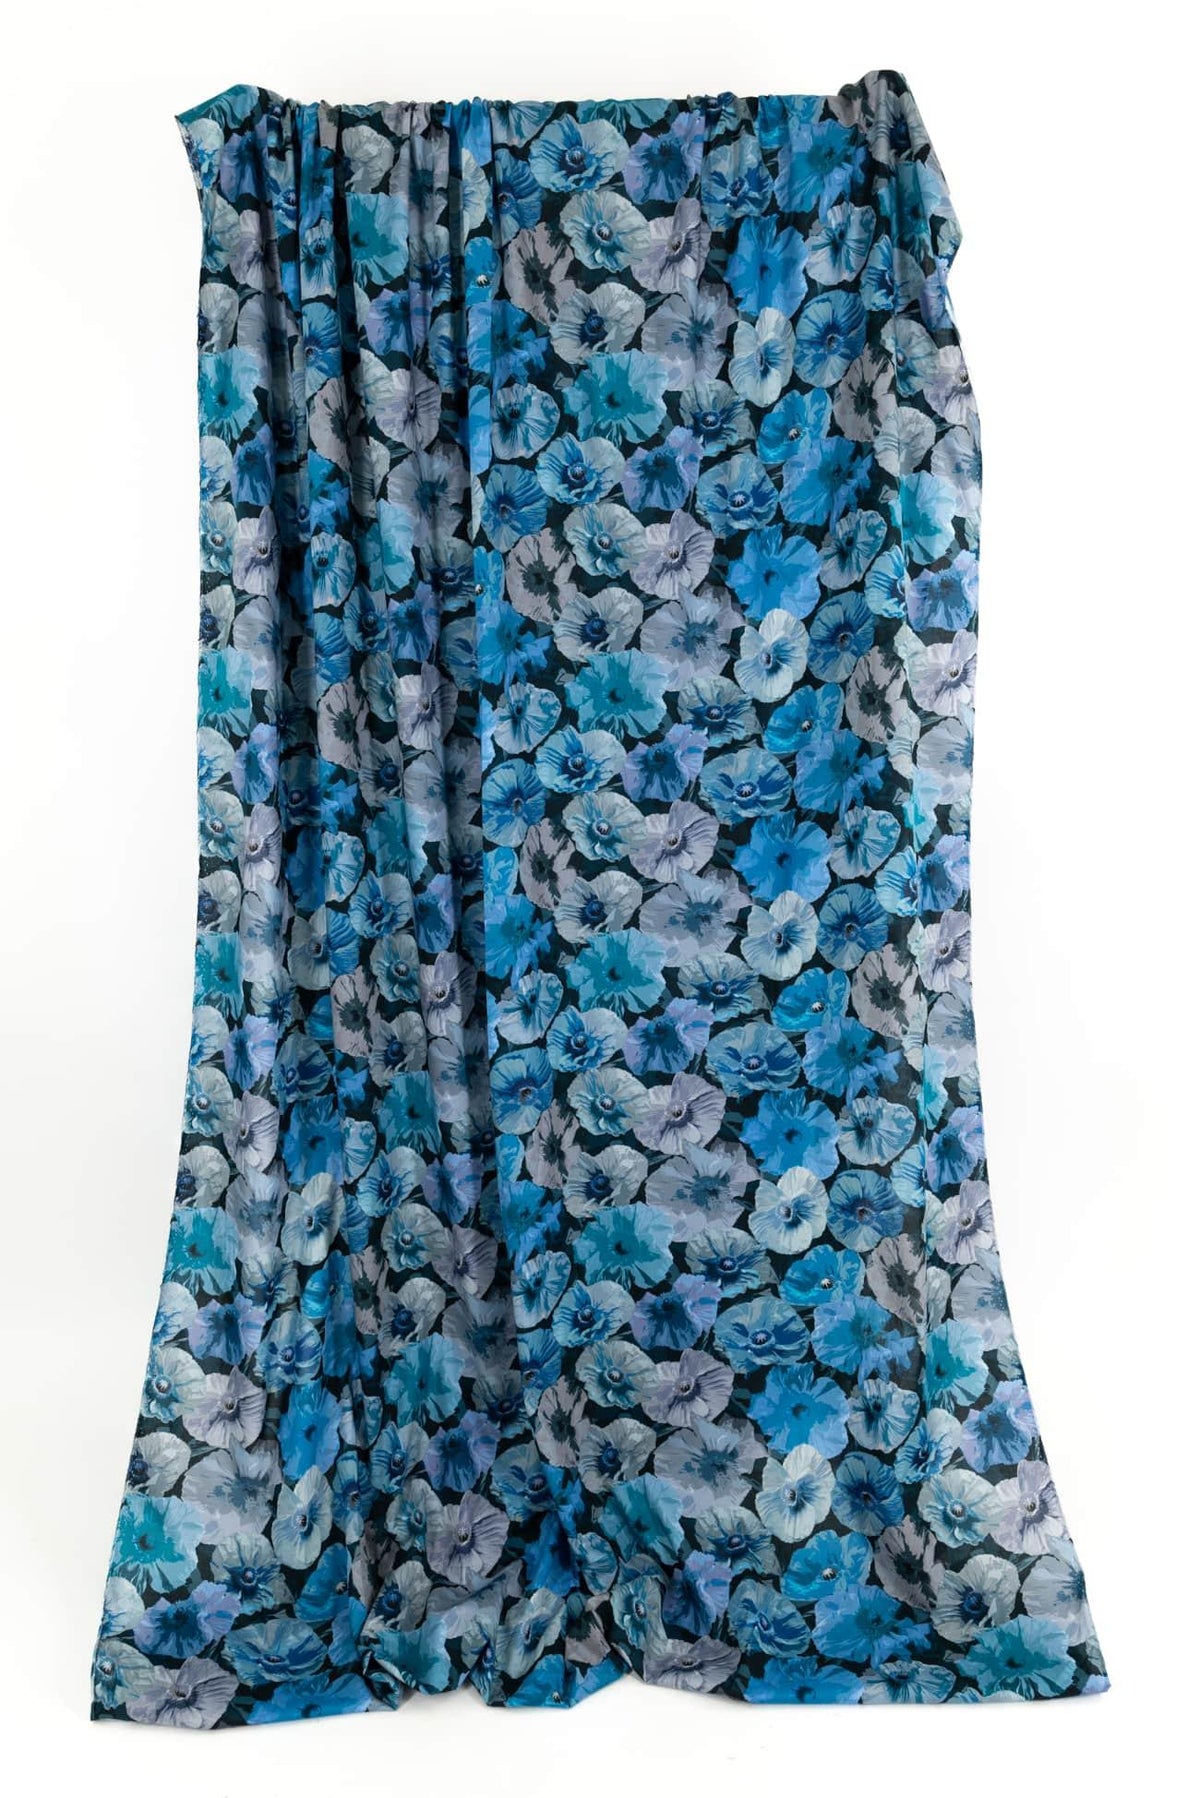 Nell Liberty Cotton Woven - Marcy Tilton Fabrics